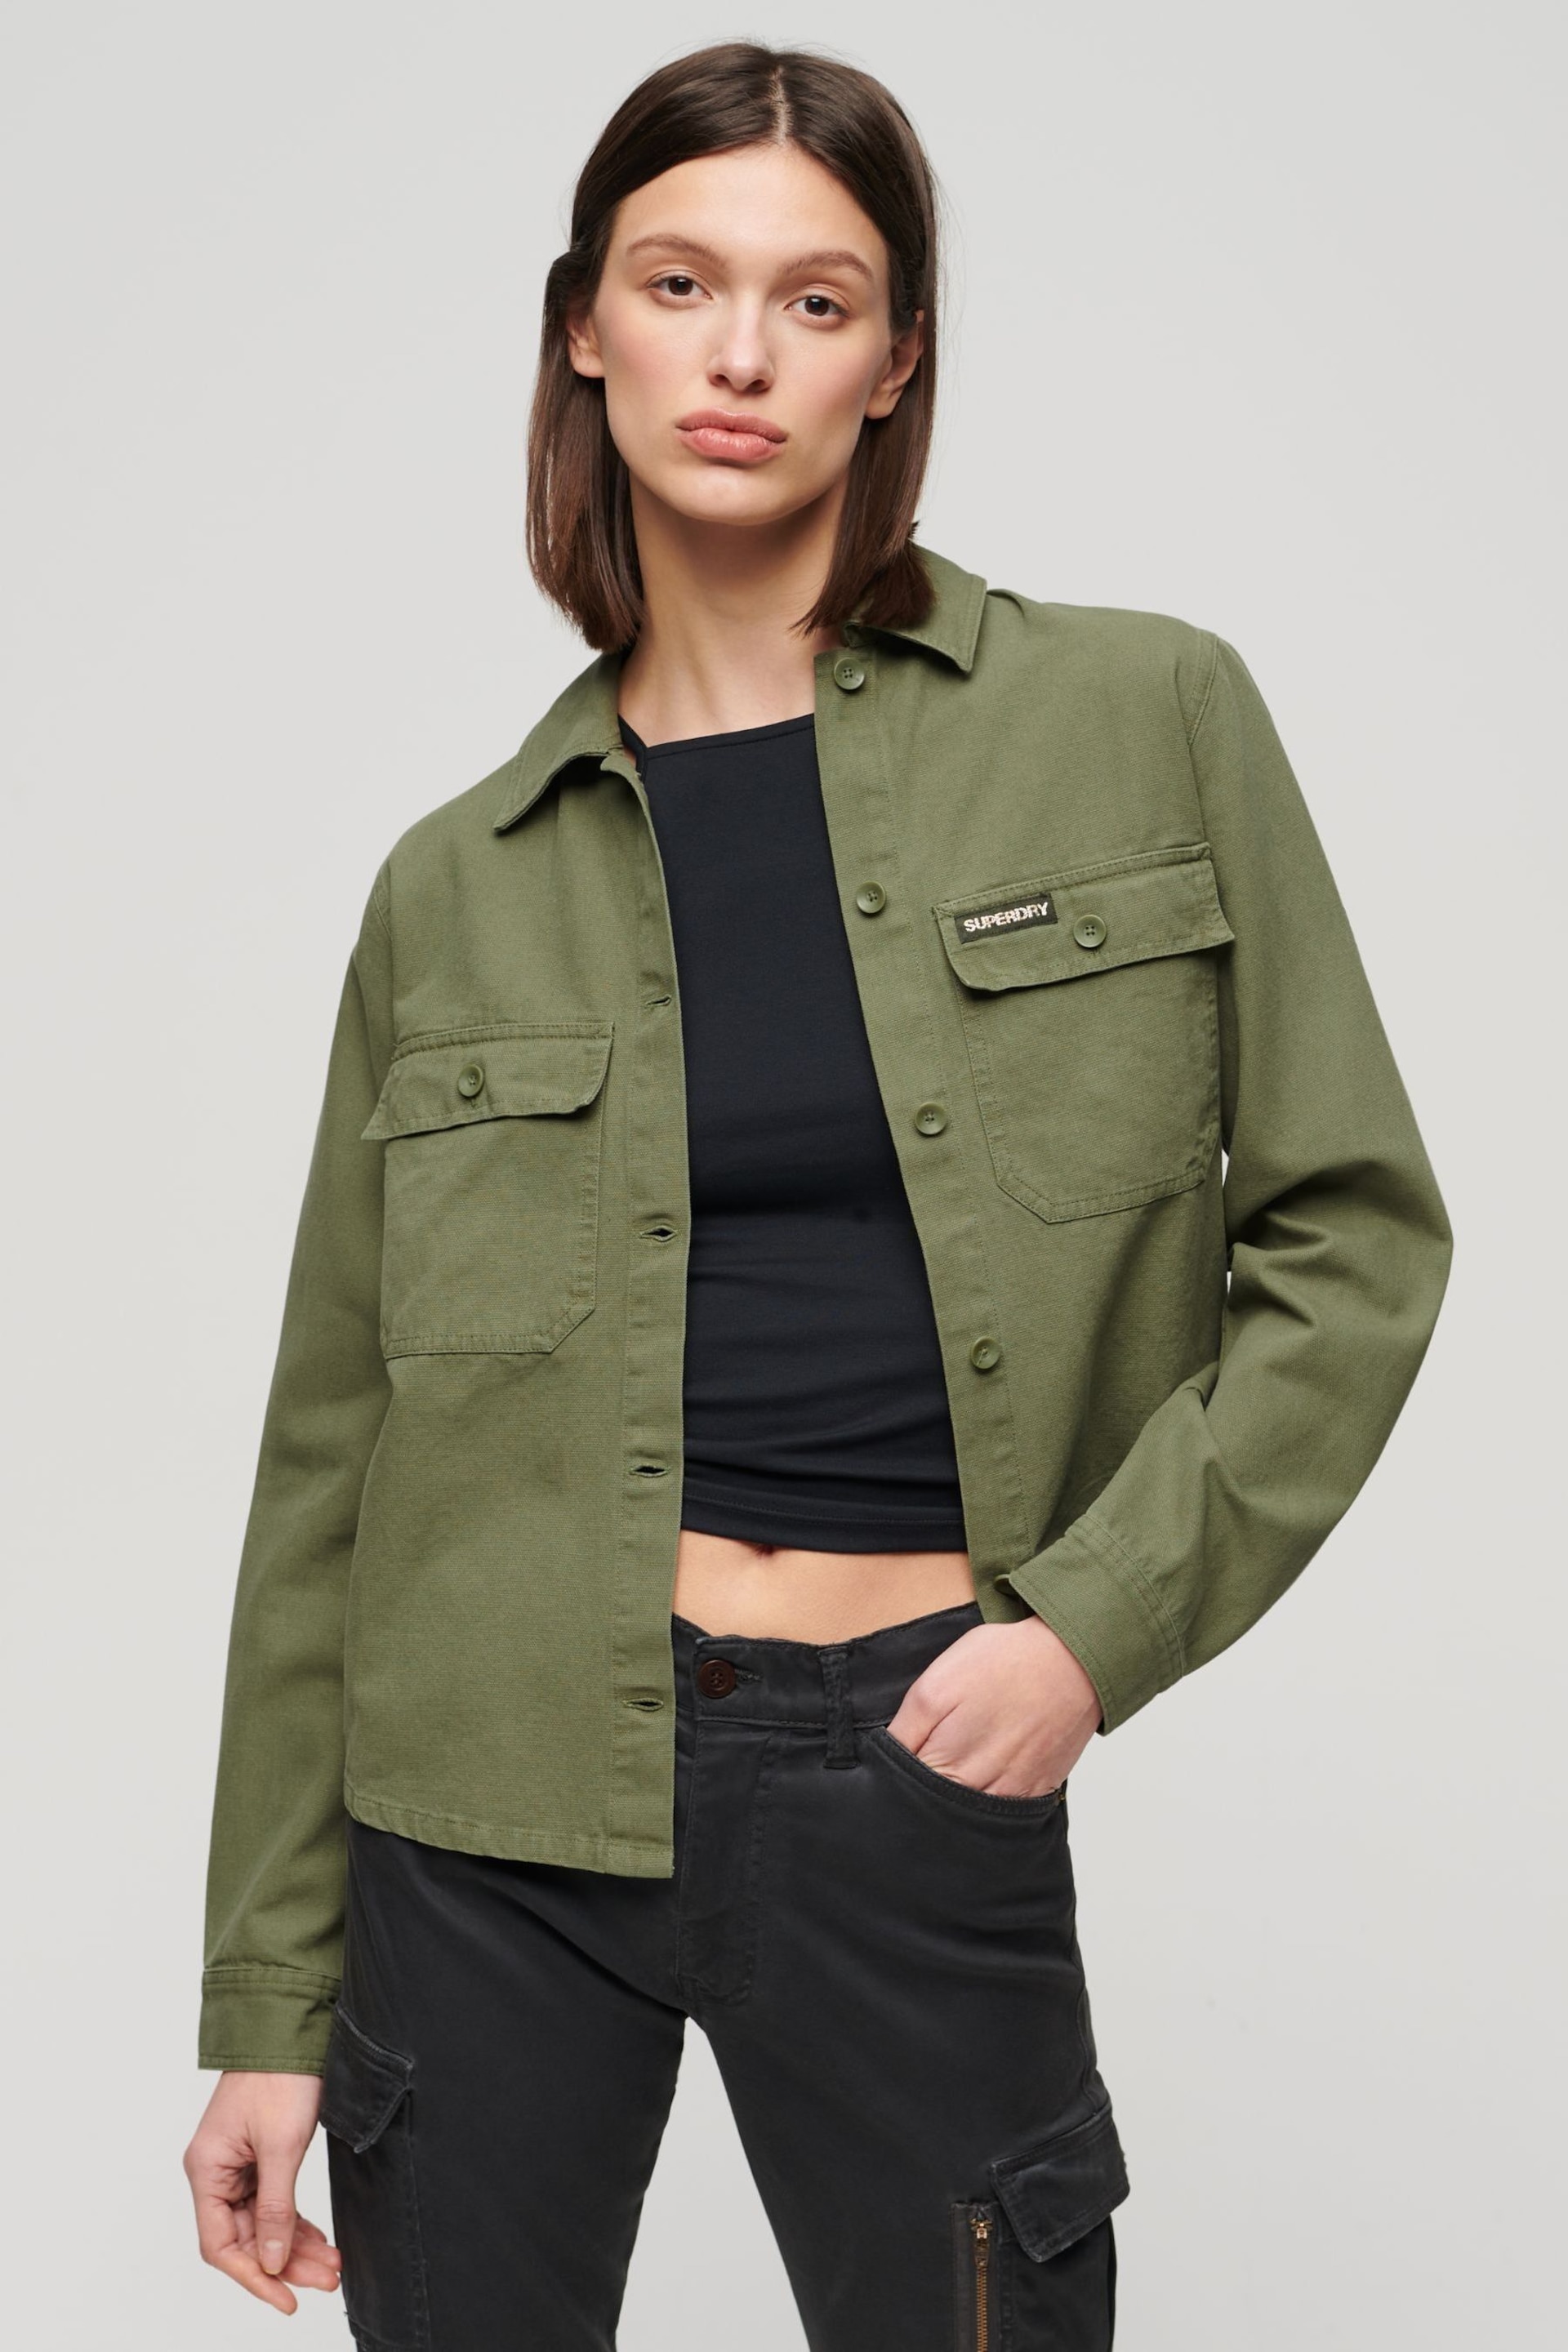 Superdry Green Embellished Military Jacket - Image 1 of 6